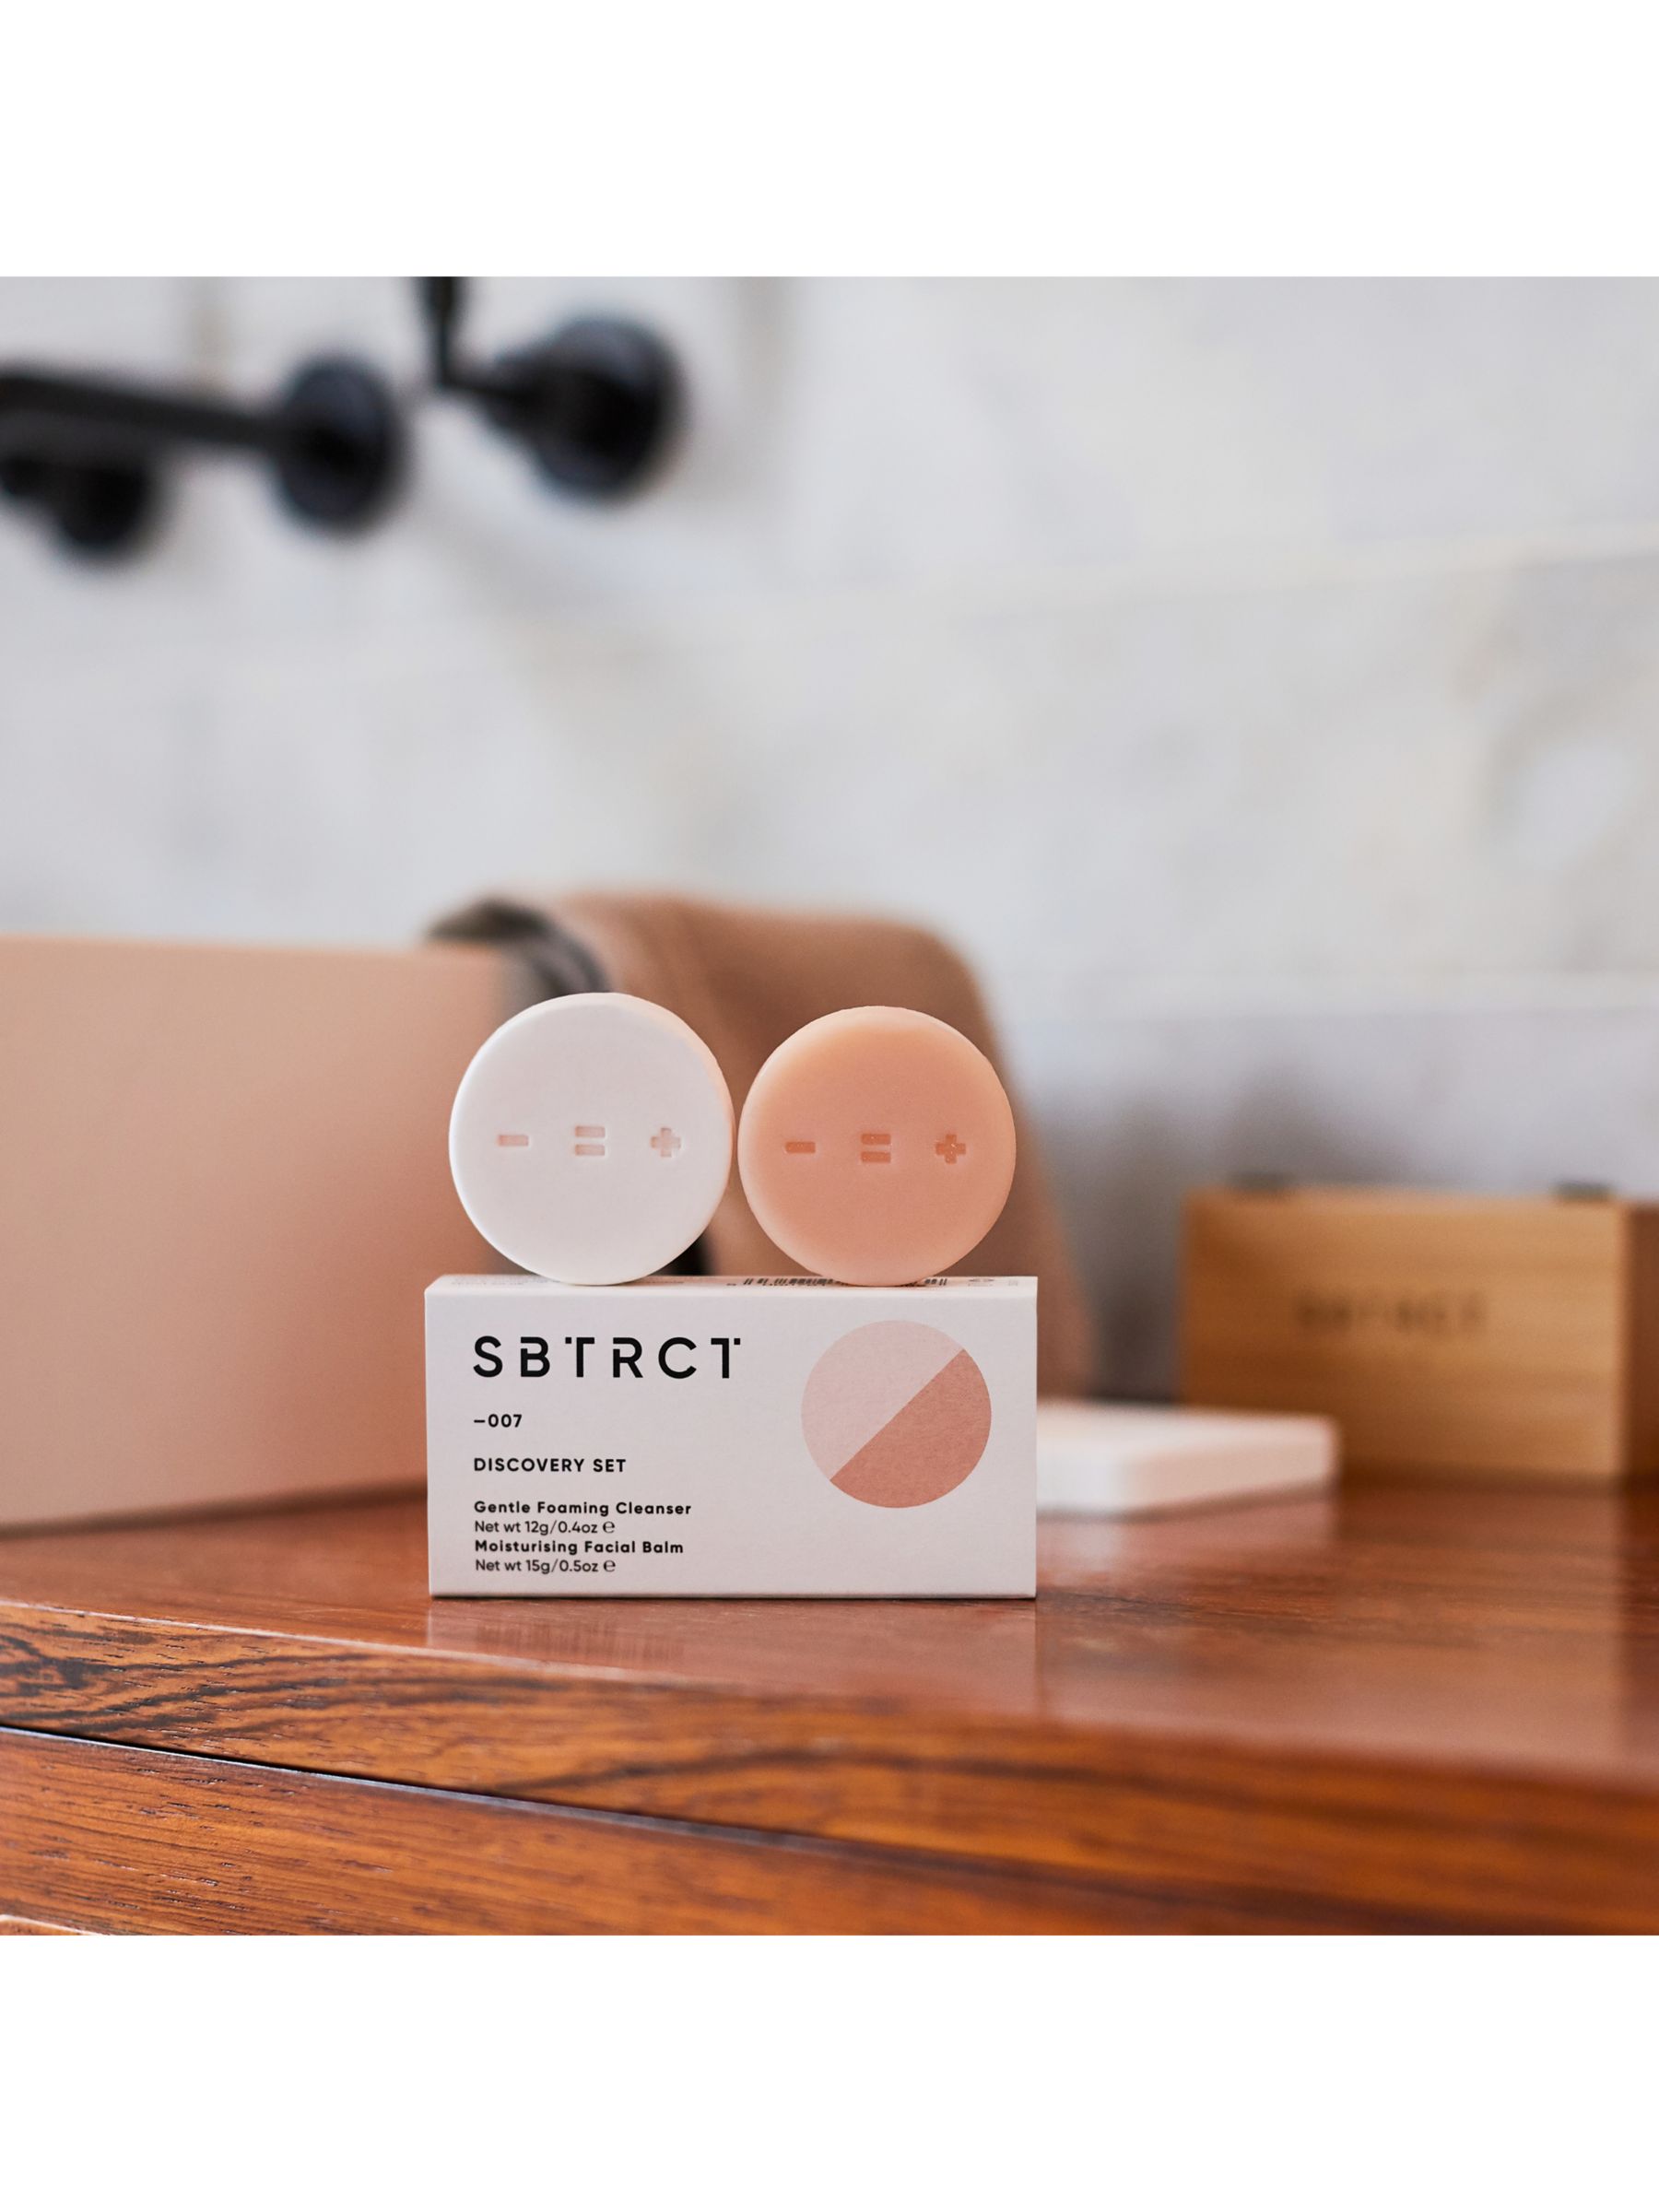 SBTRCT Cleanse + Moisturise Discovery Skincare Gift Set 2